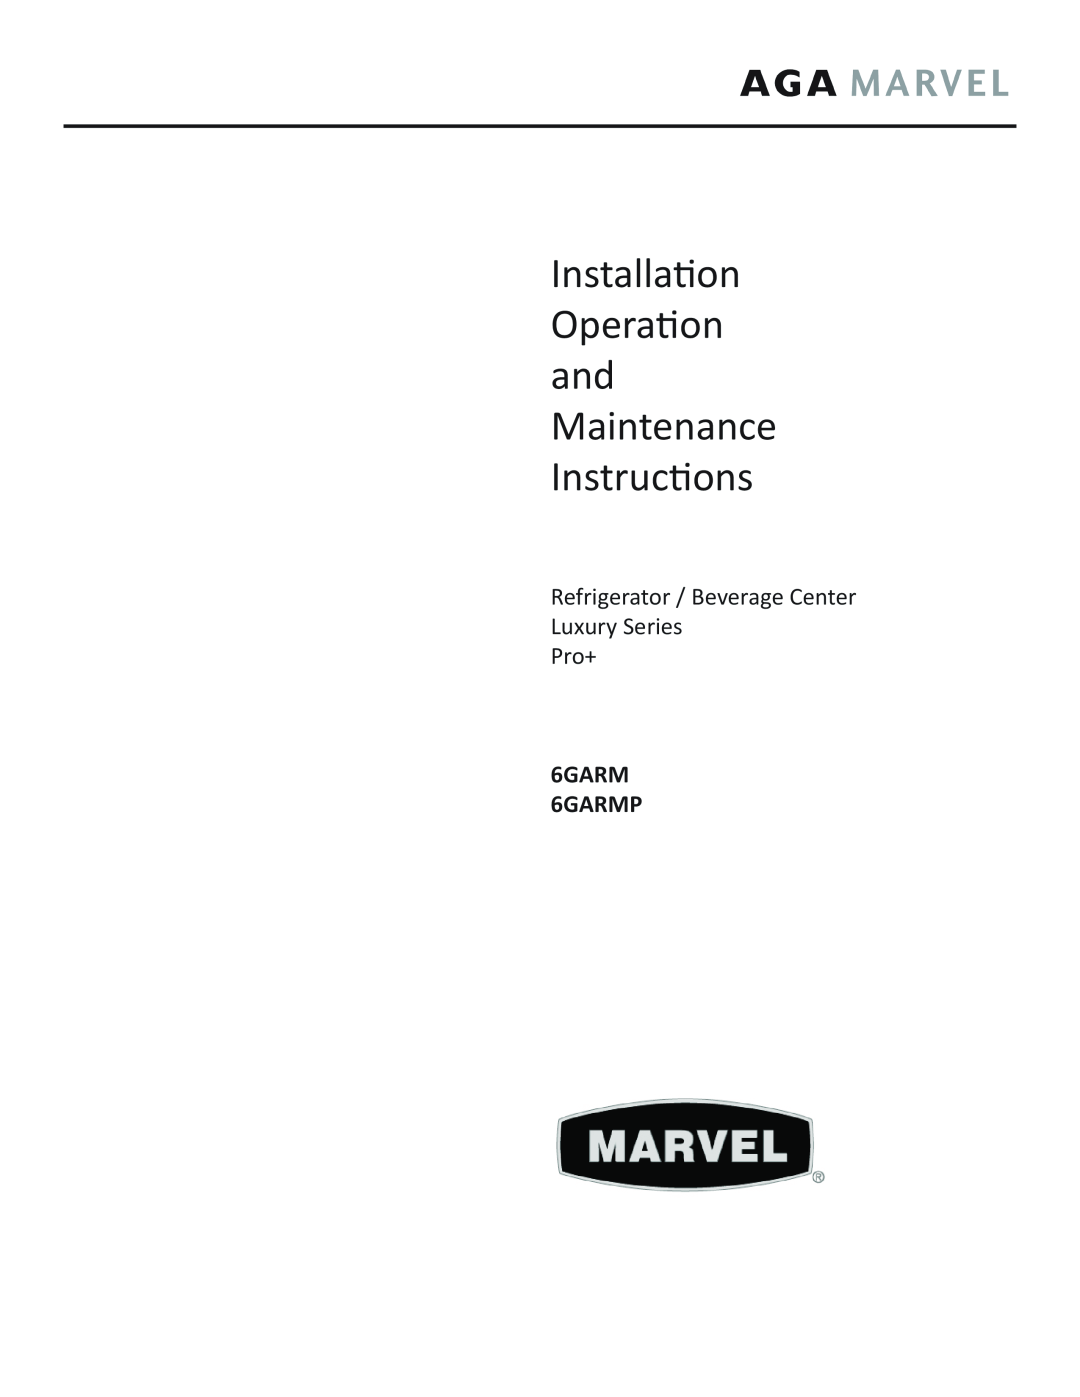 Marvel Group manual Installation Operation and Maintenance Instructions, 6GARM 6GARMP 